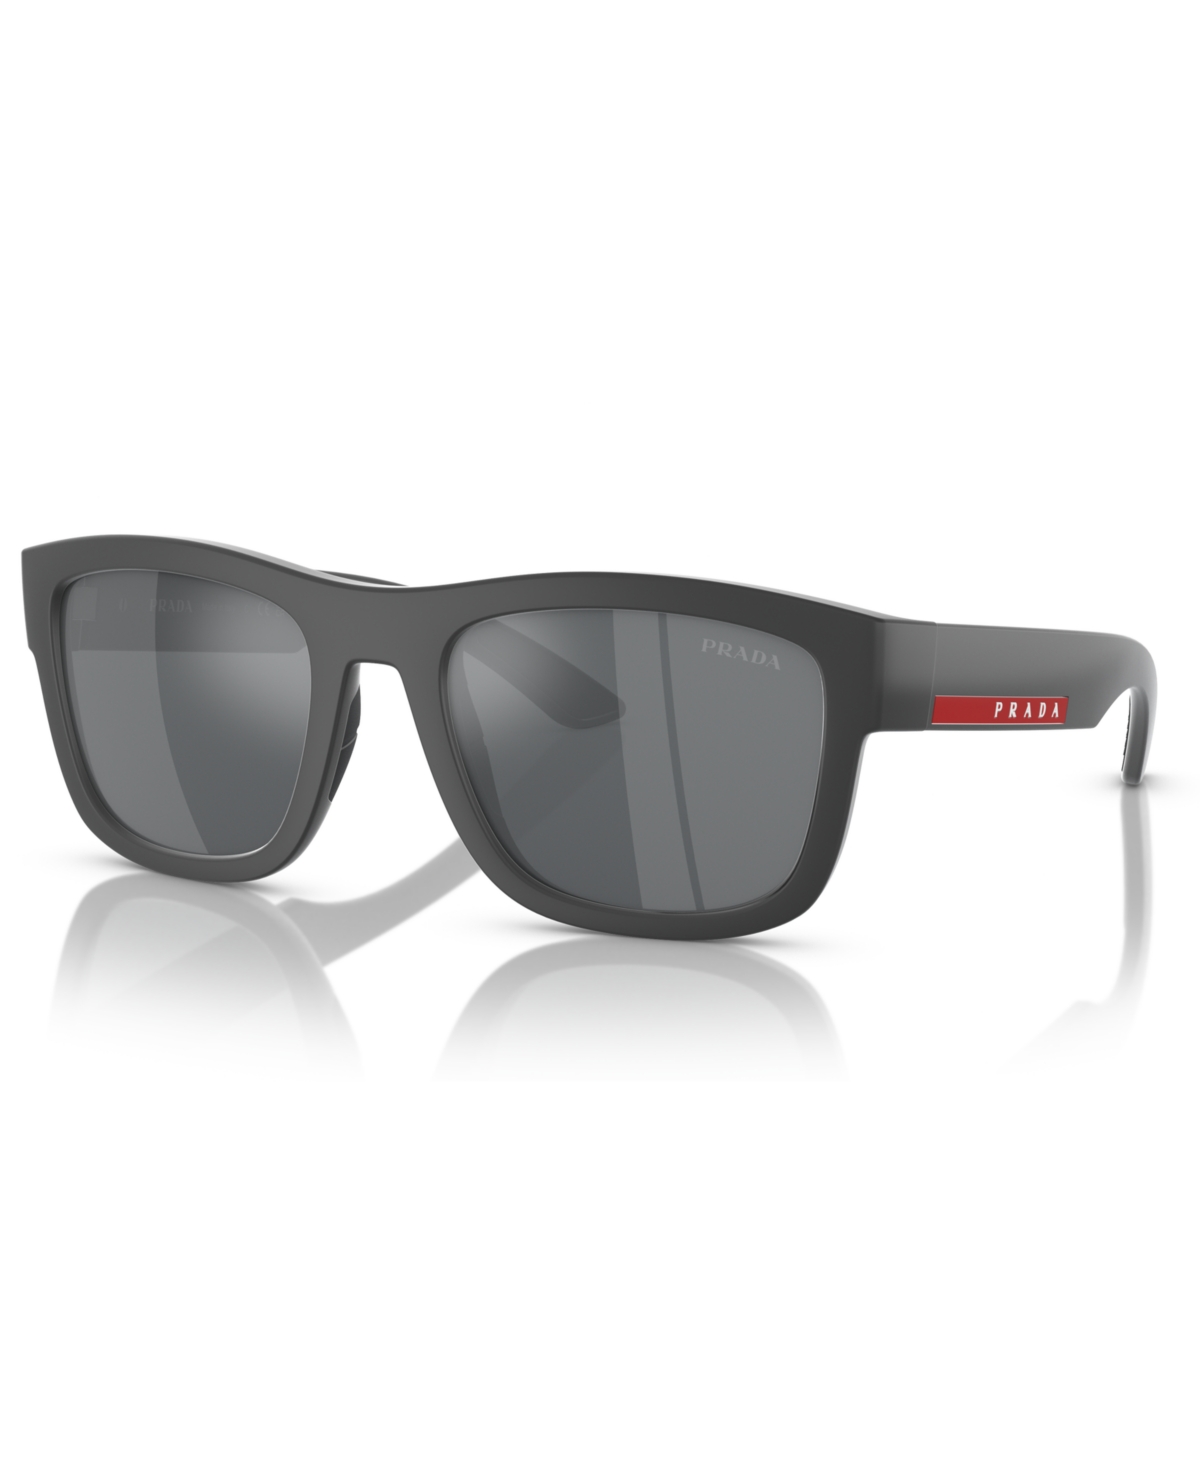 Men's Sunglasses, Ps 01ZS - Grey Rubber